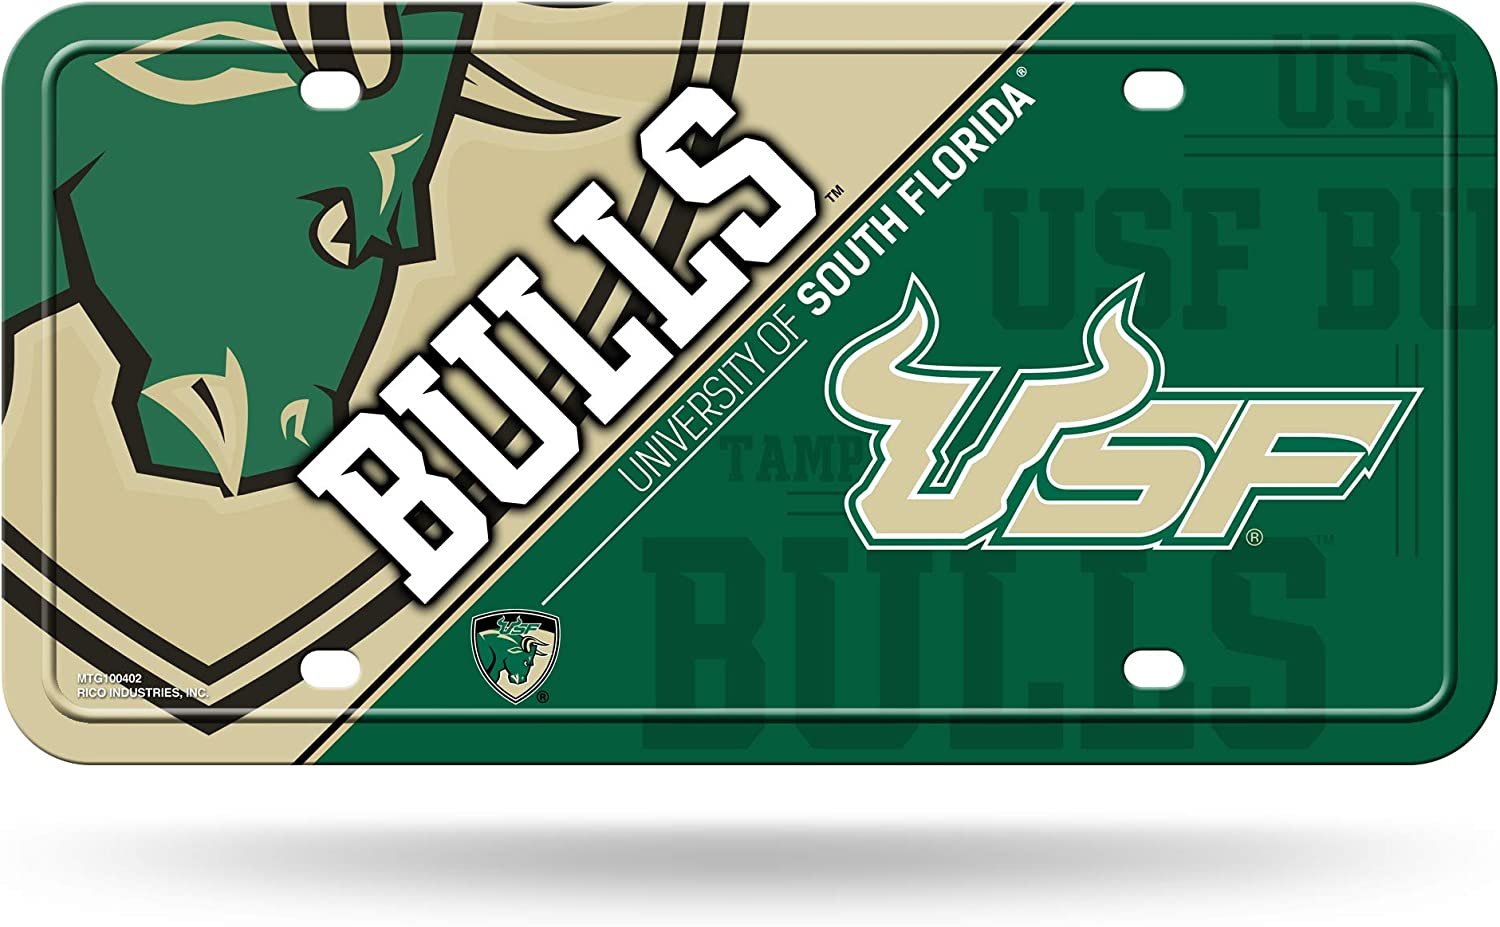 University of South Florida Bulls USF Metal License Plate Tag 12x6 Inch Split Design